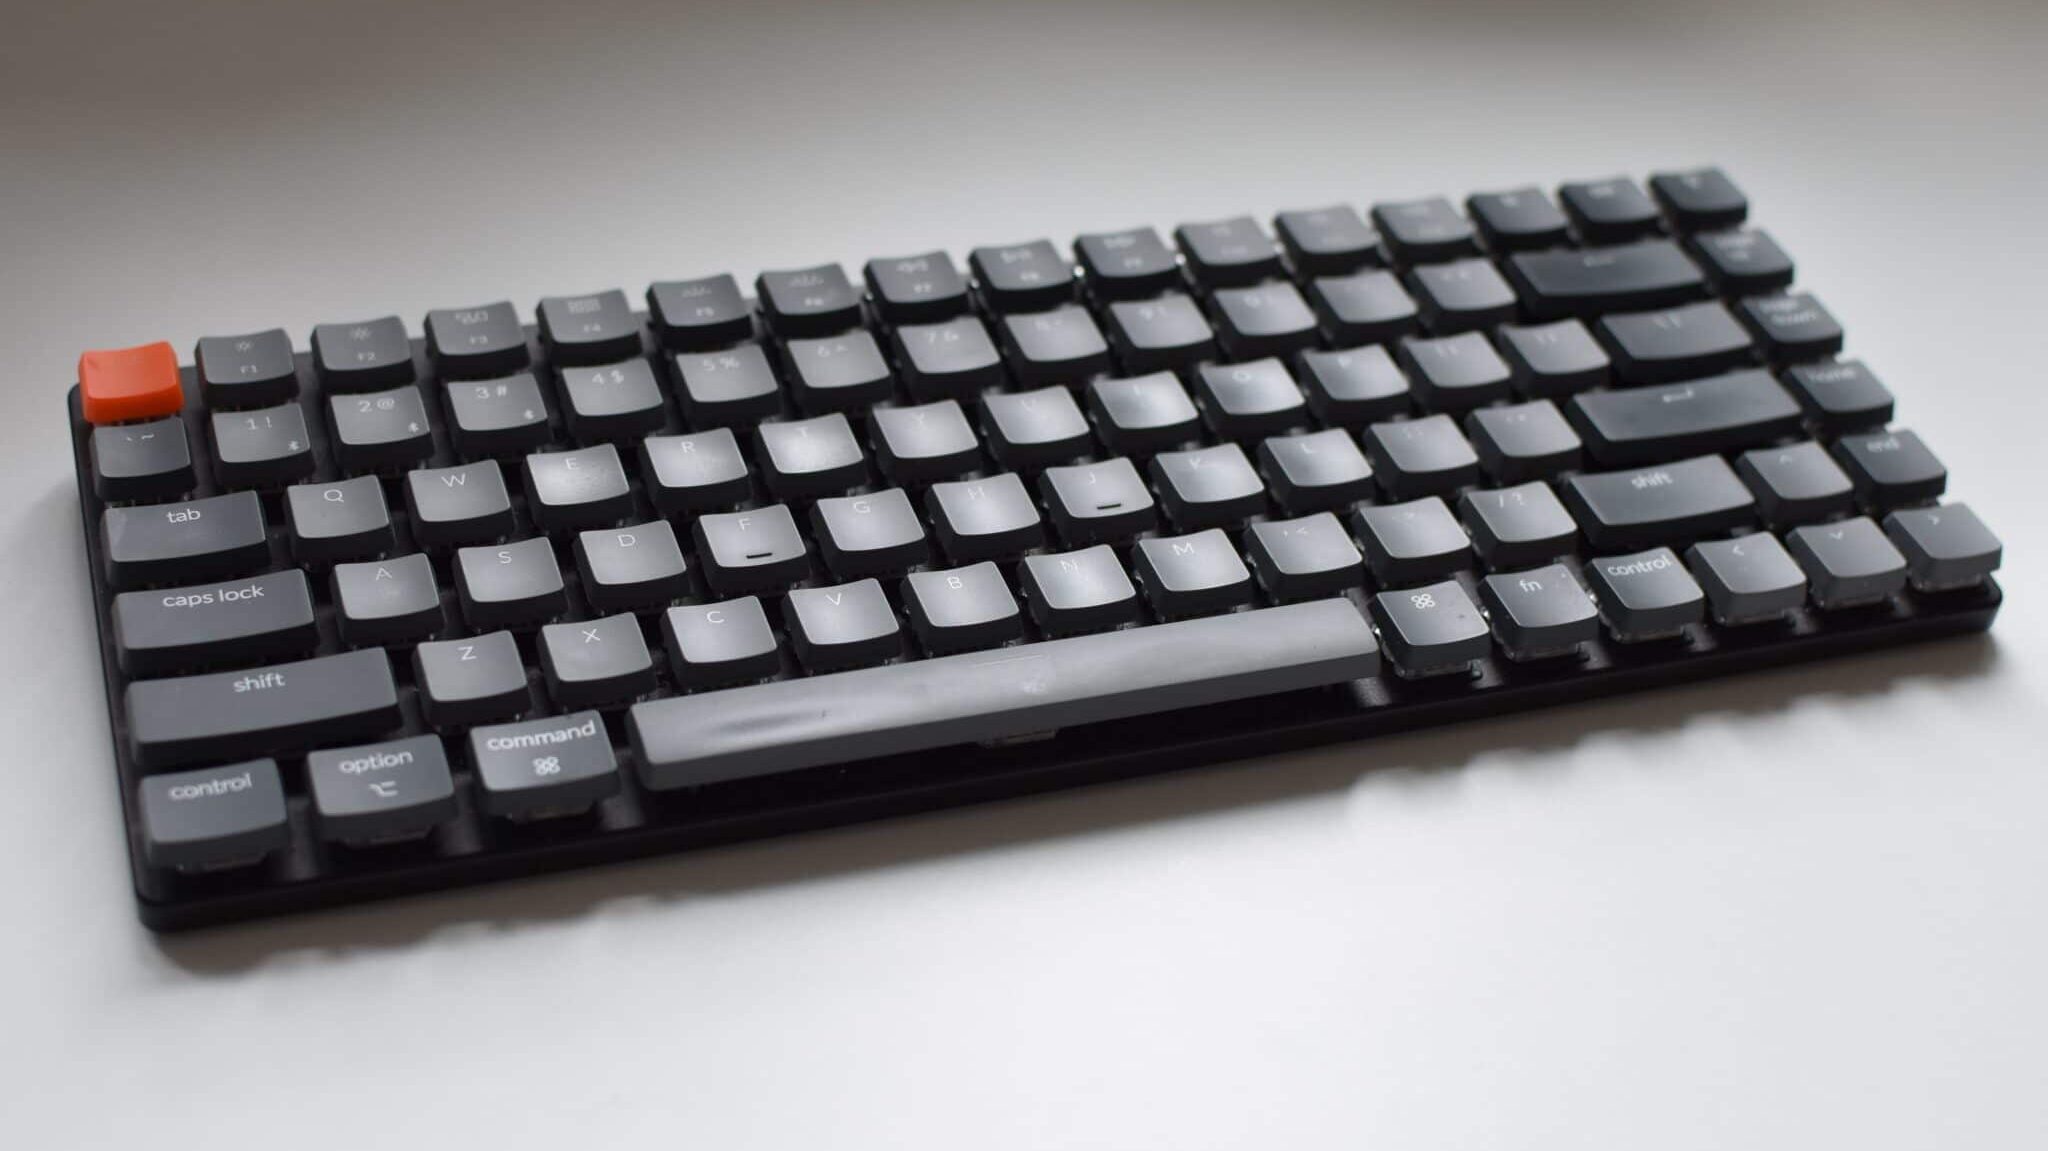 A Keychron K3 low profile mechnanical keyboard.